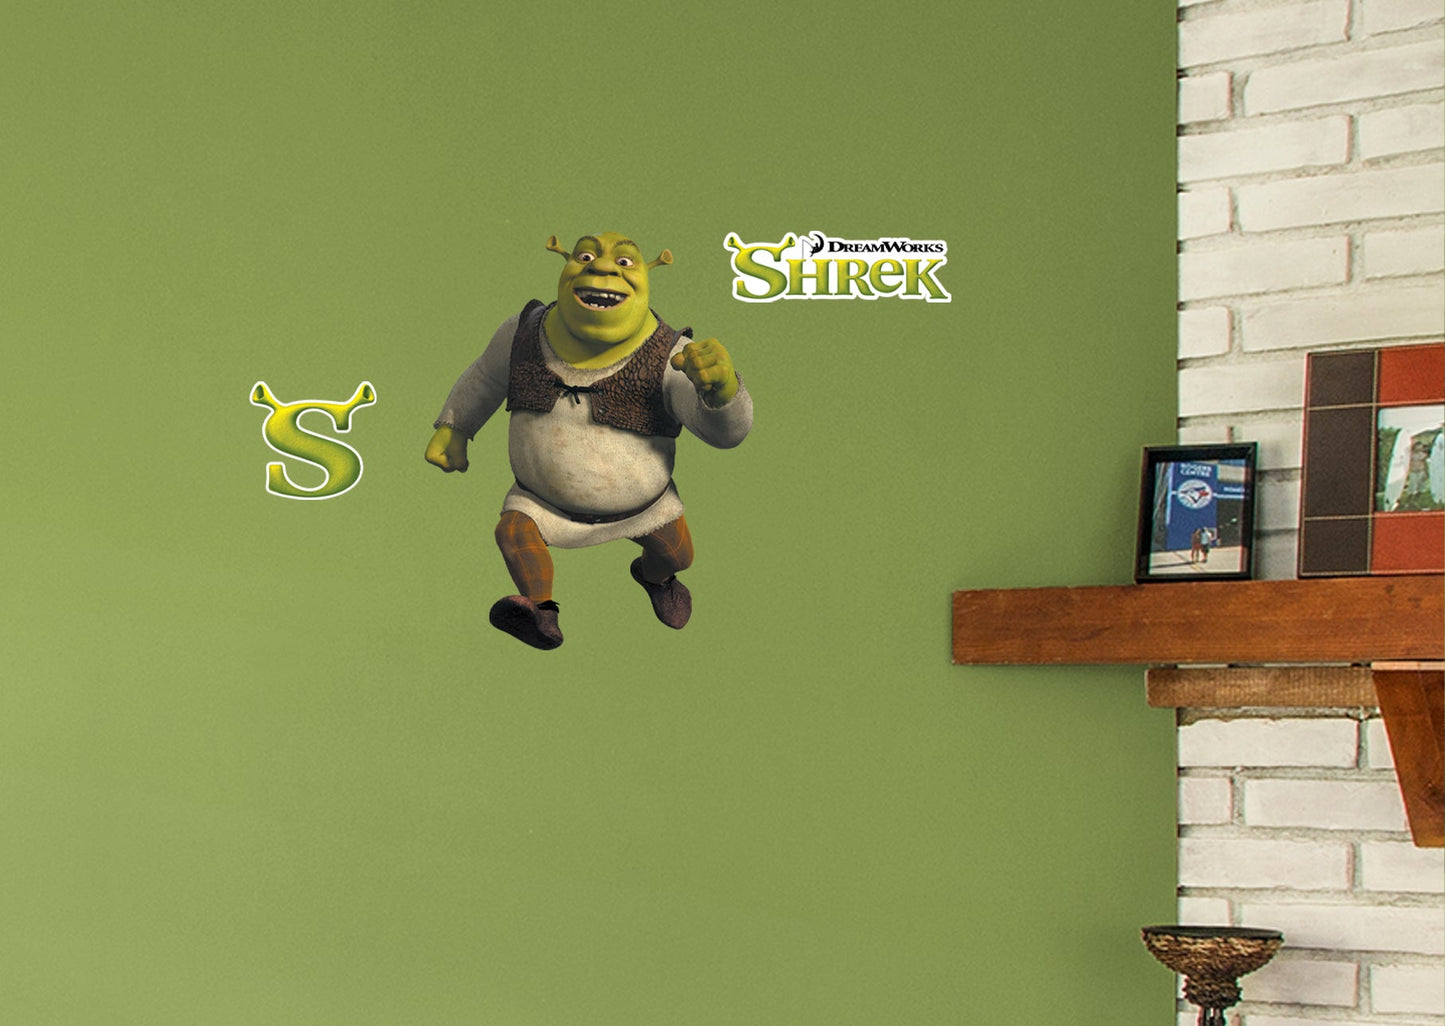 Shrek: Shrek Running RealBig - Officially Licensed NBC Universal Removable Adhesive Decal